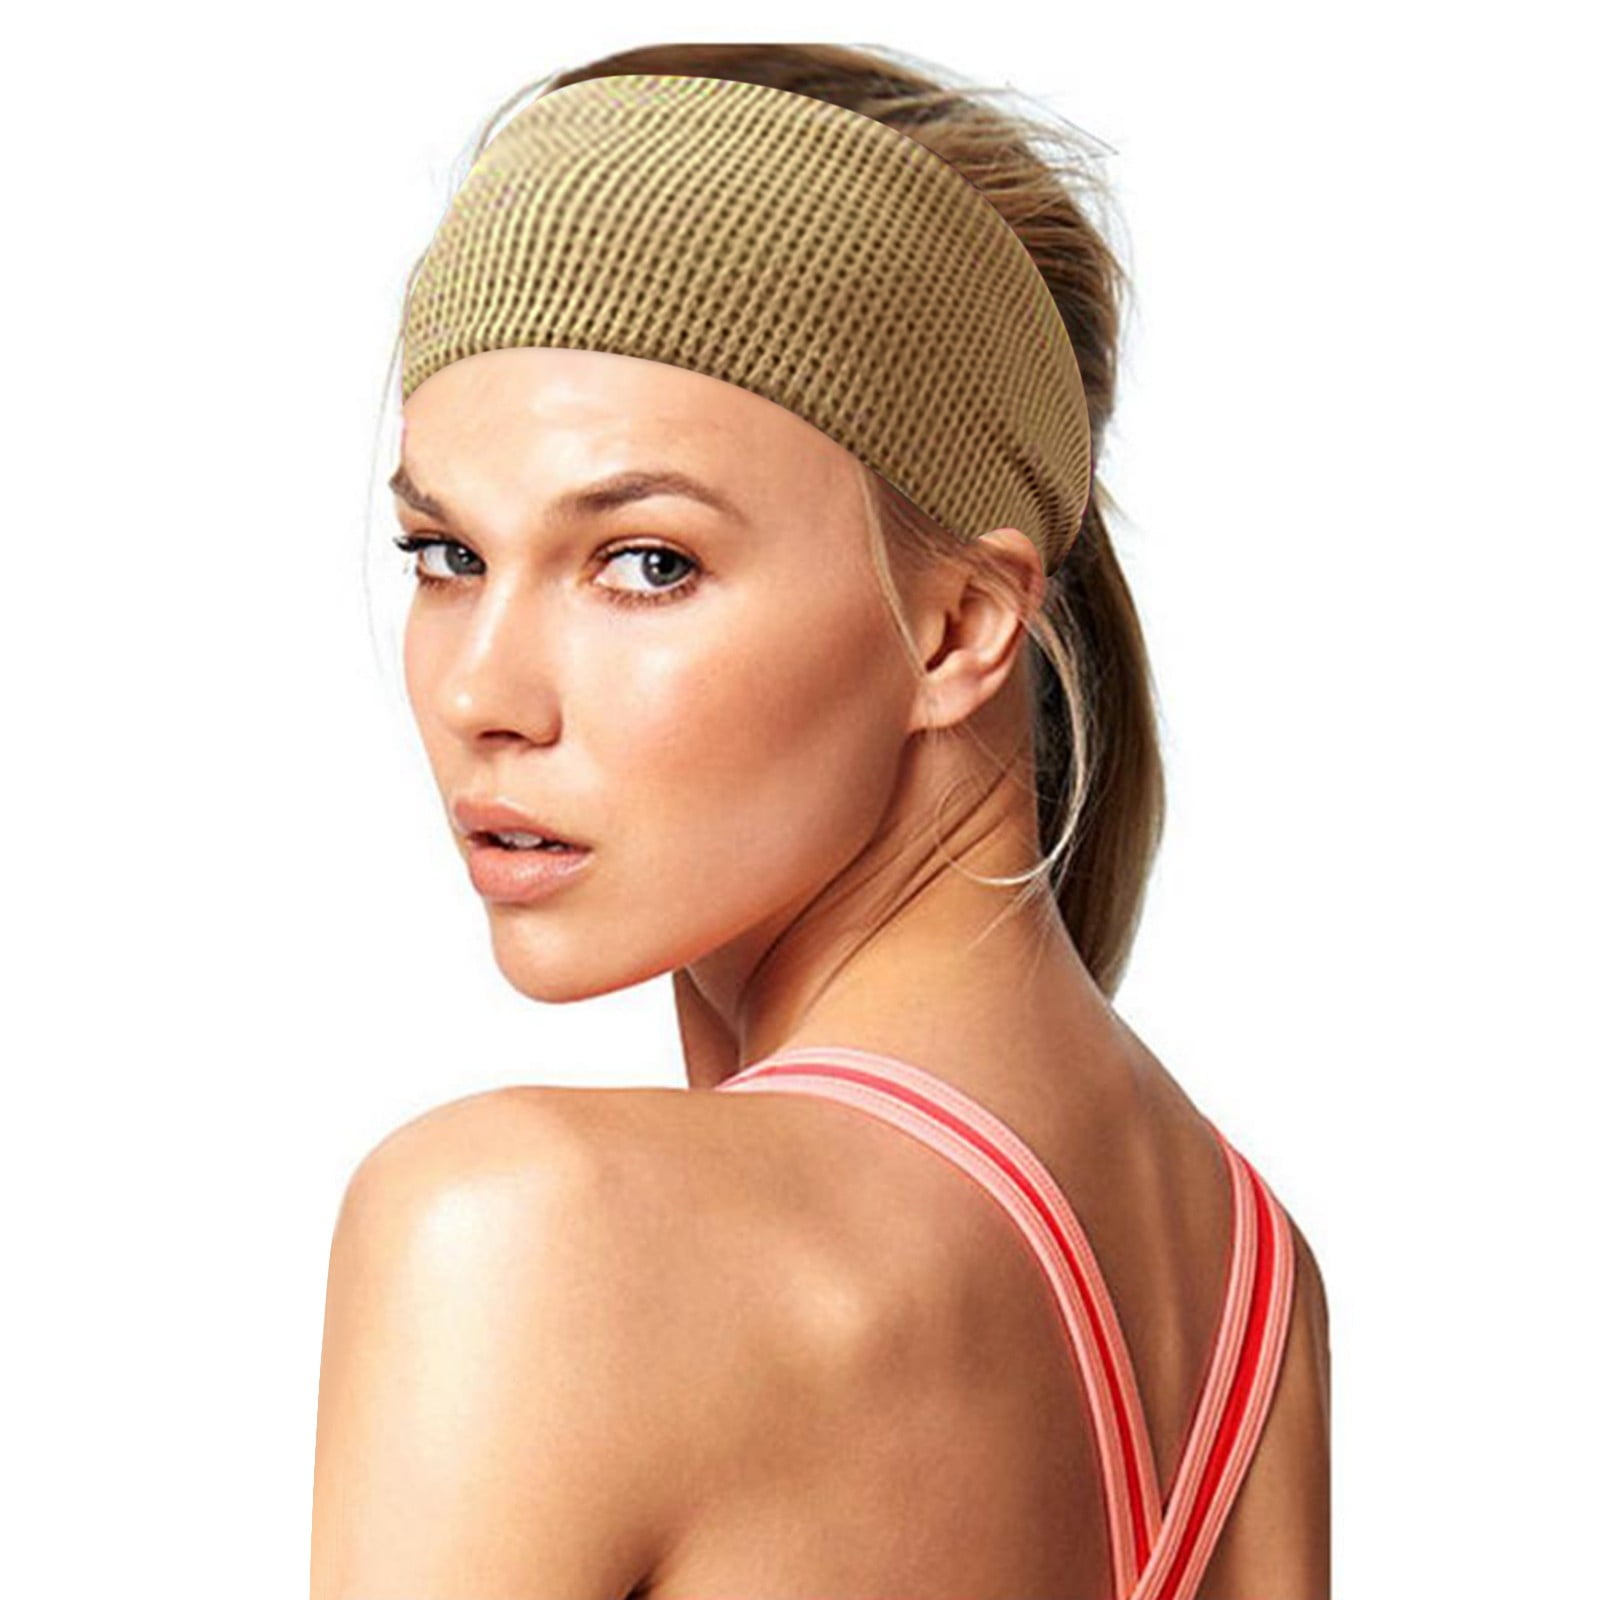 Adopt Don't Shop Animal Headband Running Apparel Knot Headband Nonslip Knotted Headband for Women Yoga Headband